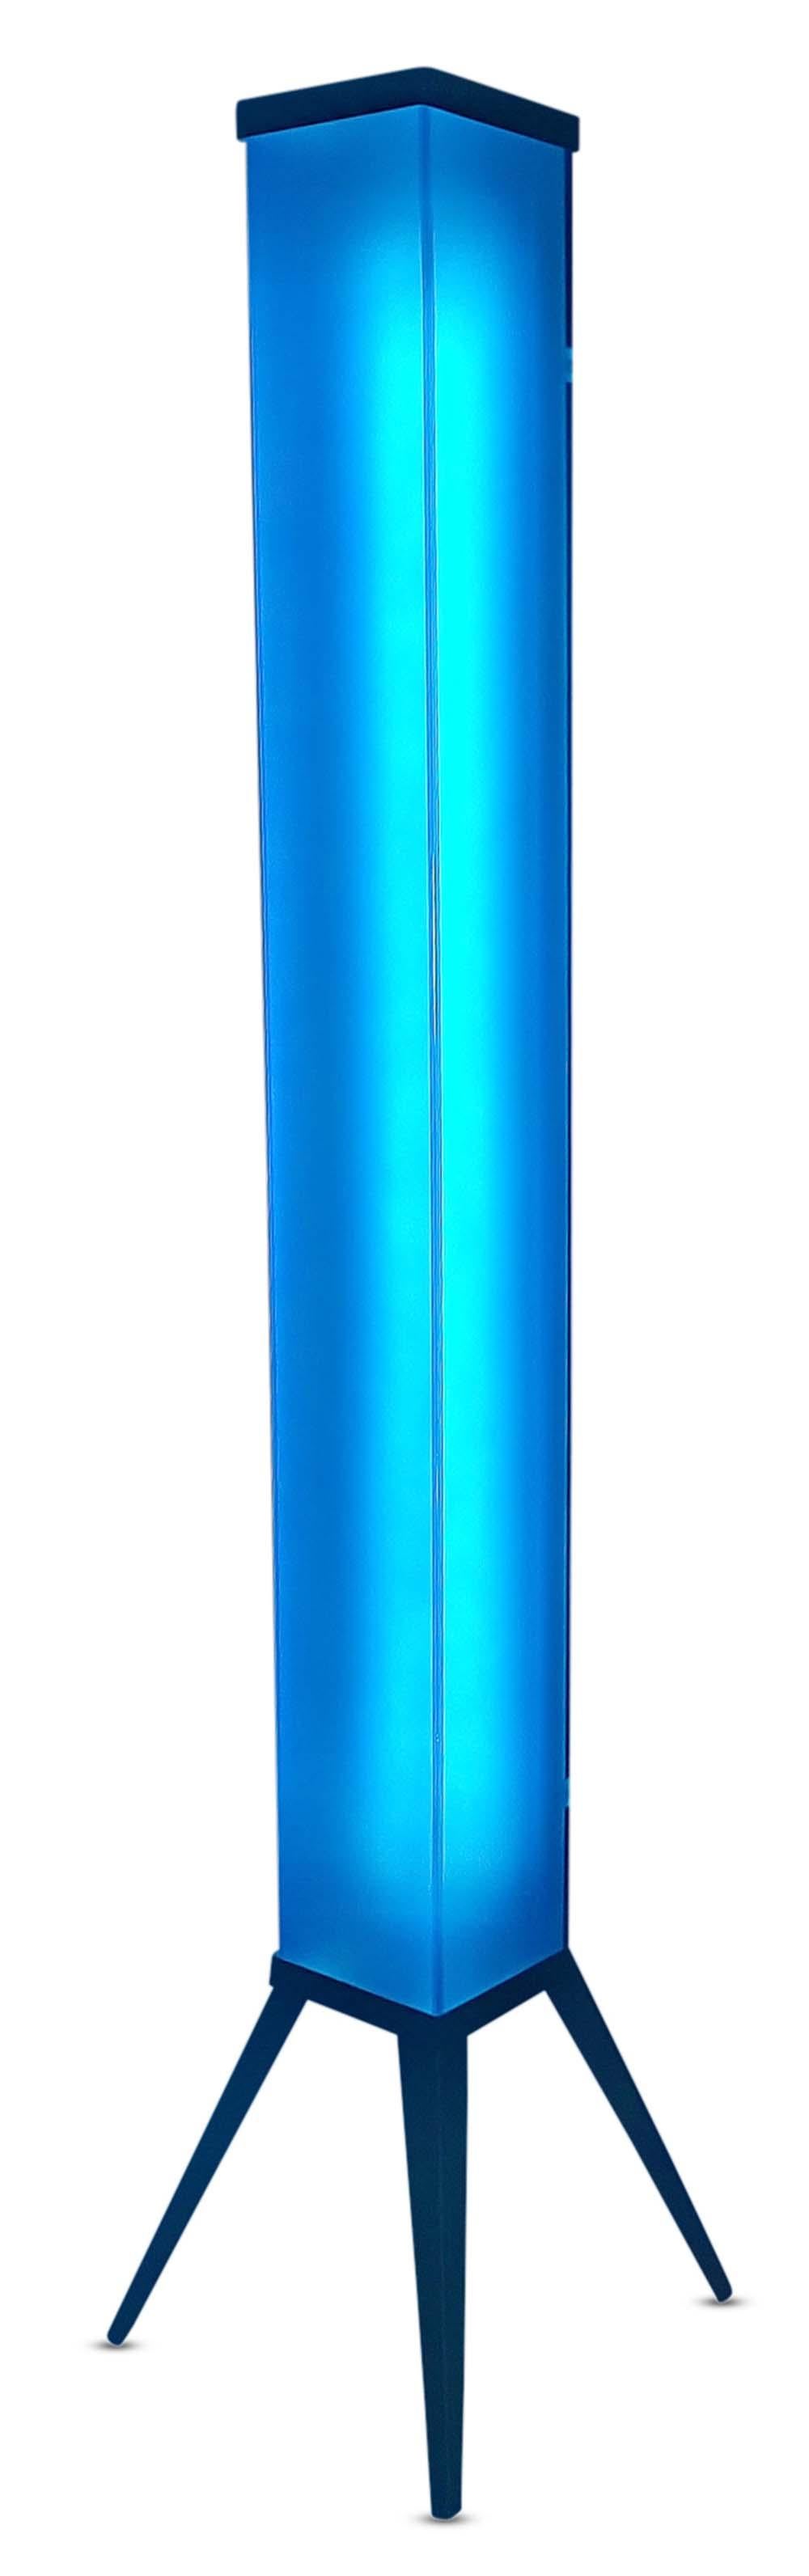 American Post-Modern Sculptural Mood Lighting Tower Blue Glass Floor Lamp by Curvet USA For Sale